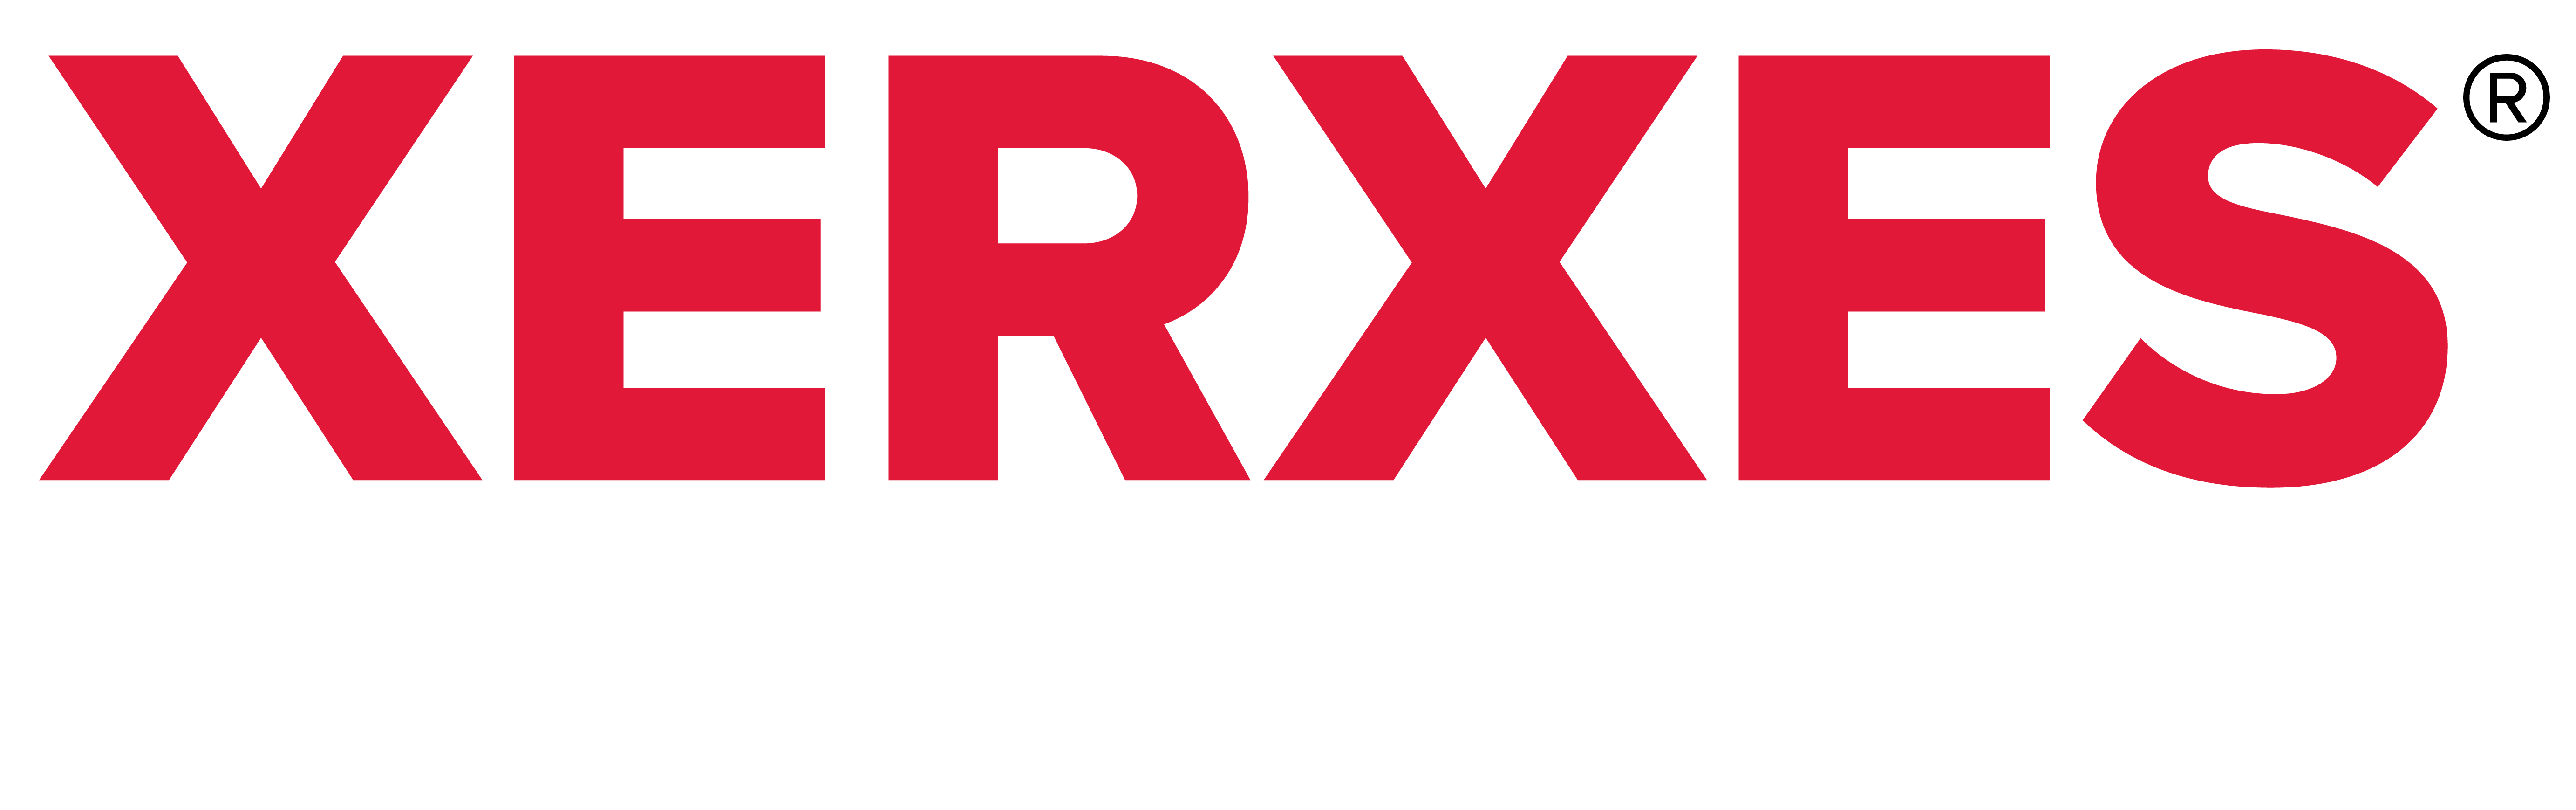 Xerxes Logo PMS186 (Red)_1_011421